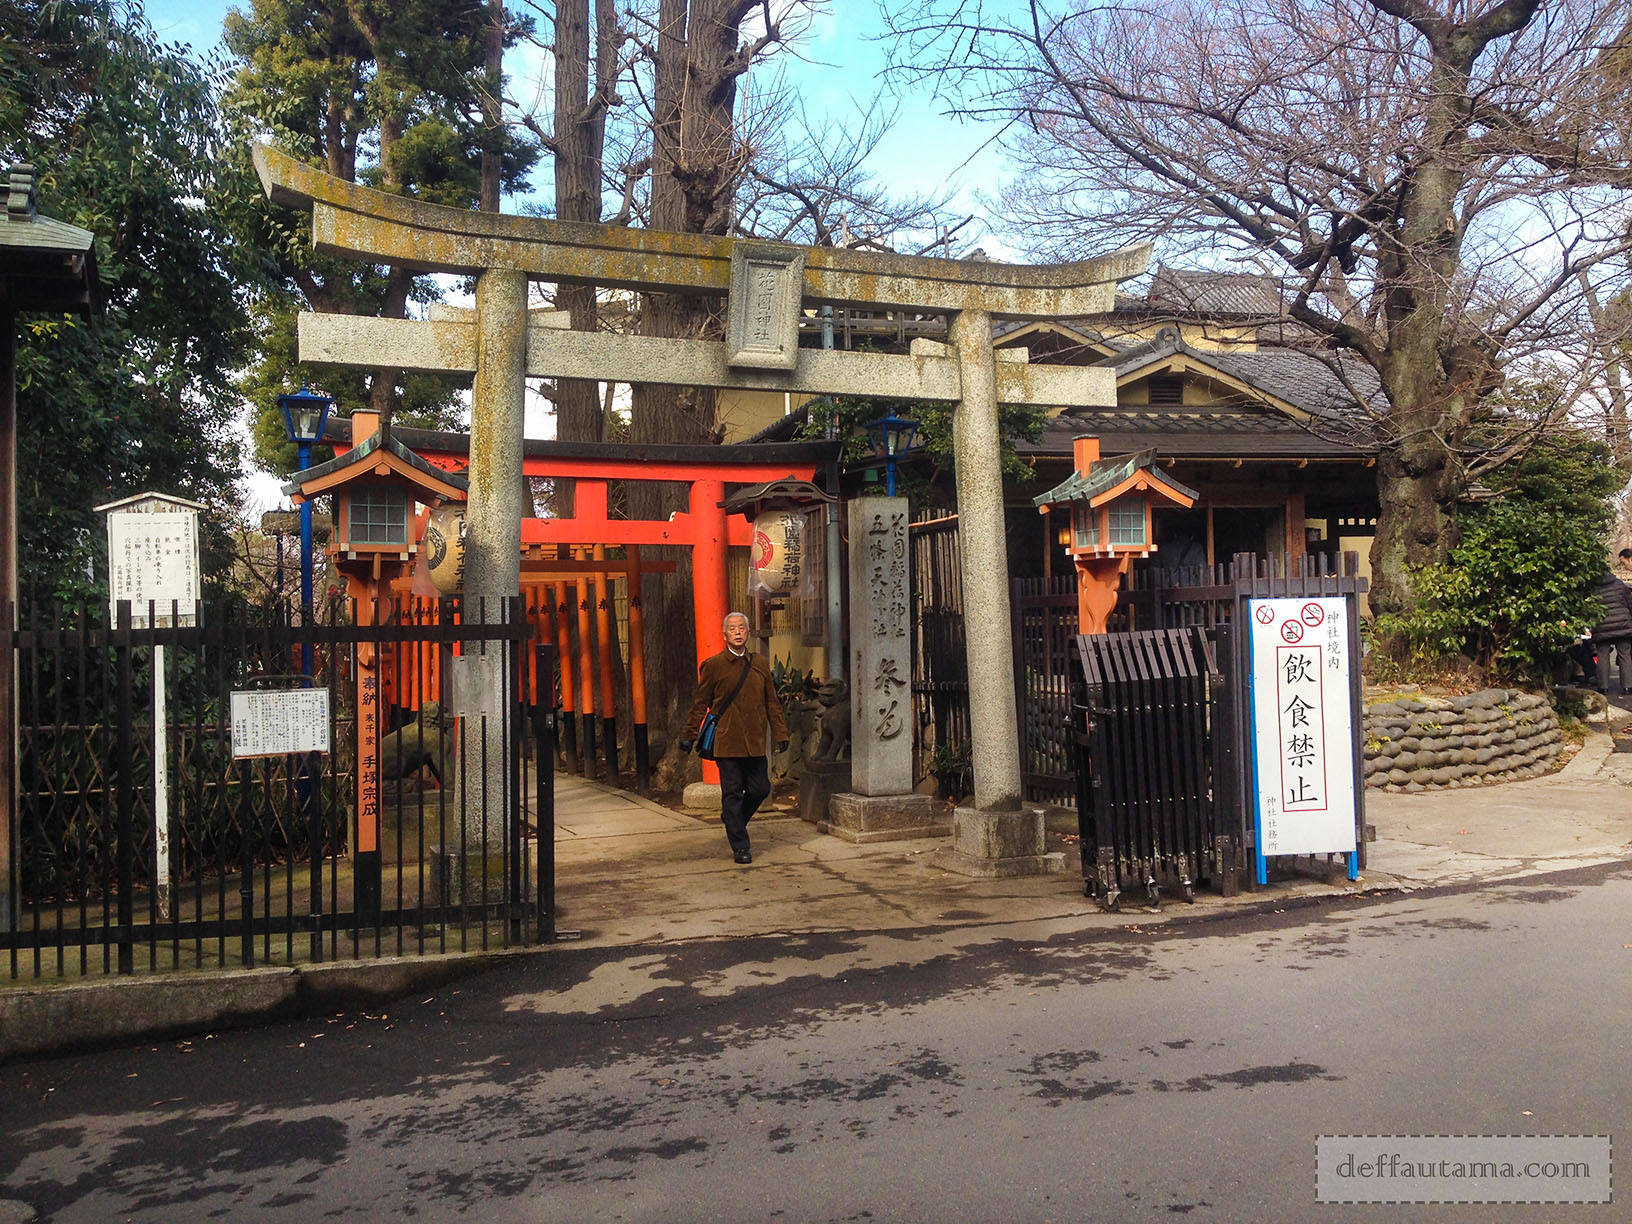 Babymoon ke Jepang - Gerbang Hanazono Inari Shrine